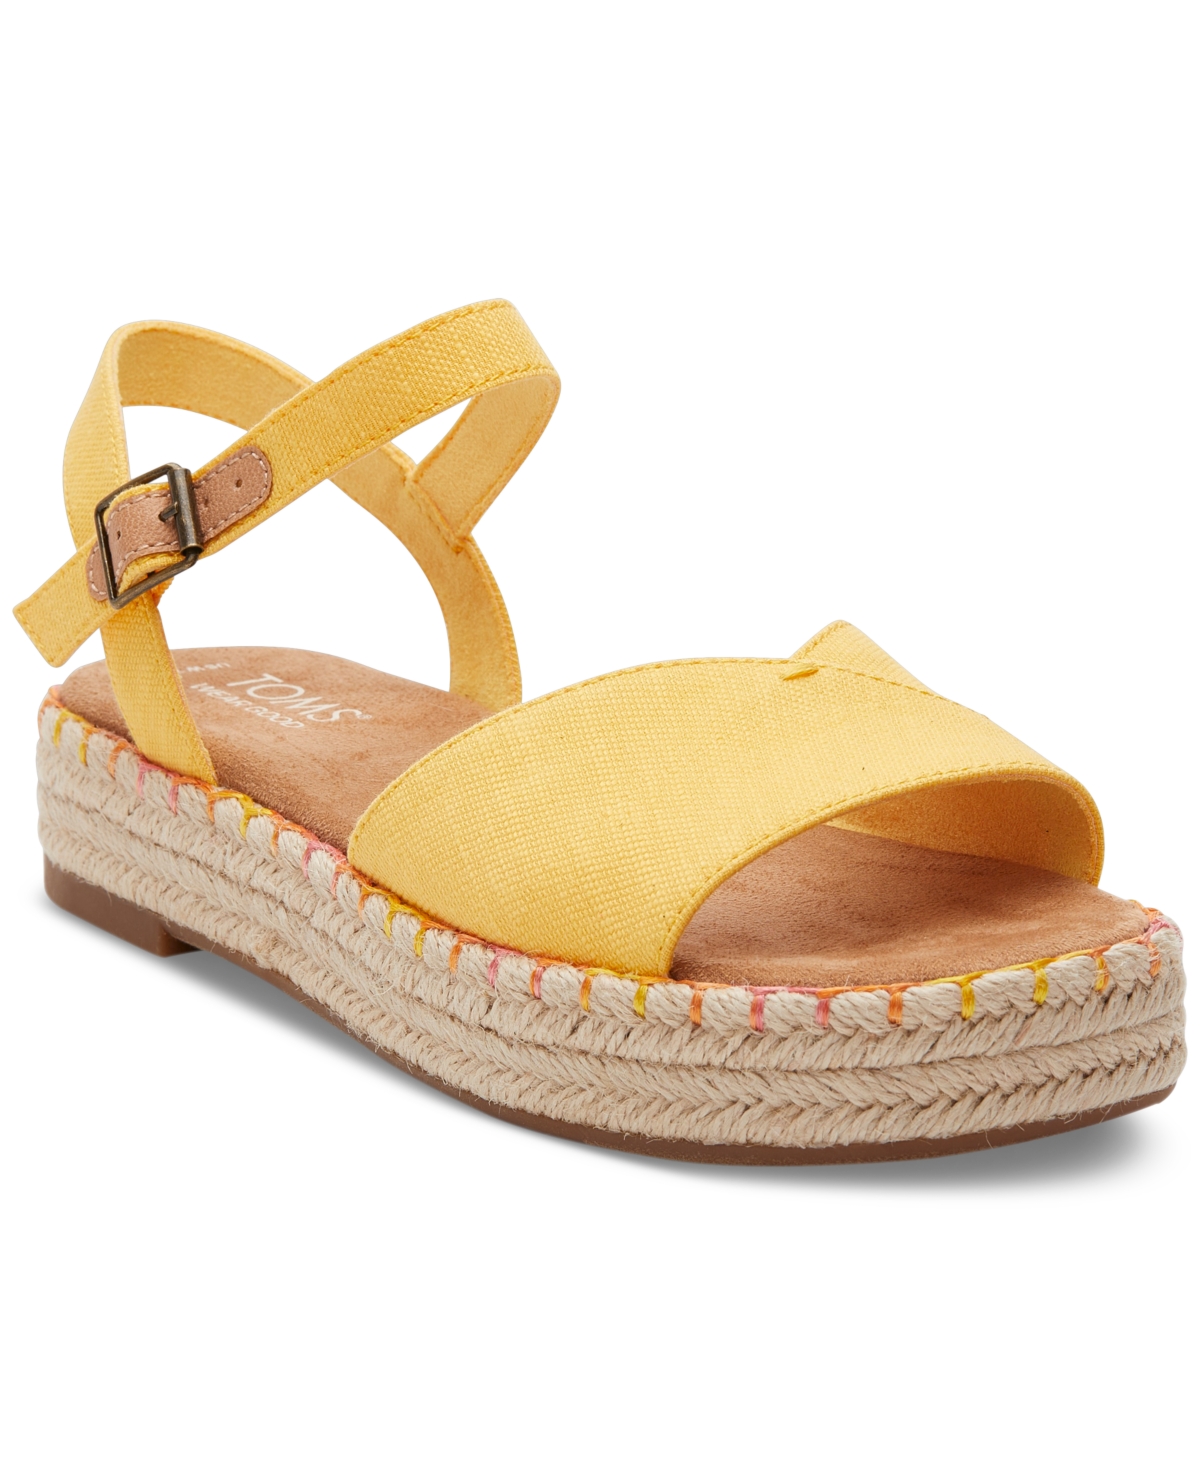 Toms Women's Abby Braided Espadrille Flatform Sandals In Pineapple Yellow Slubby Woven